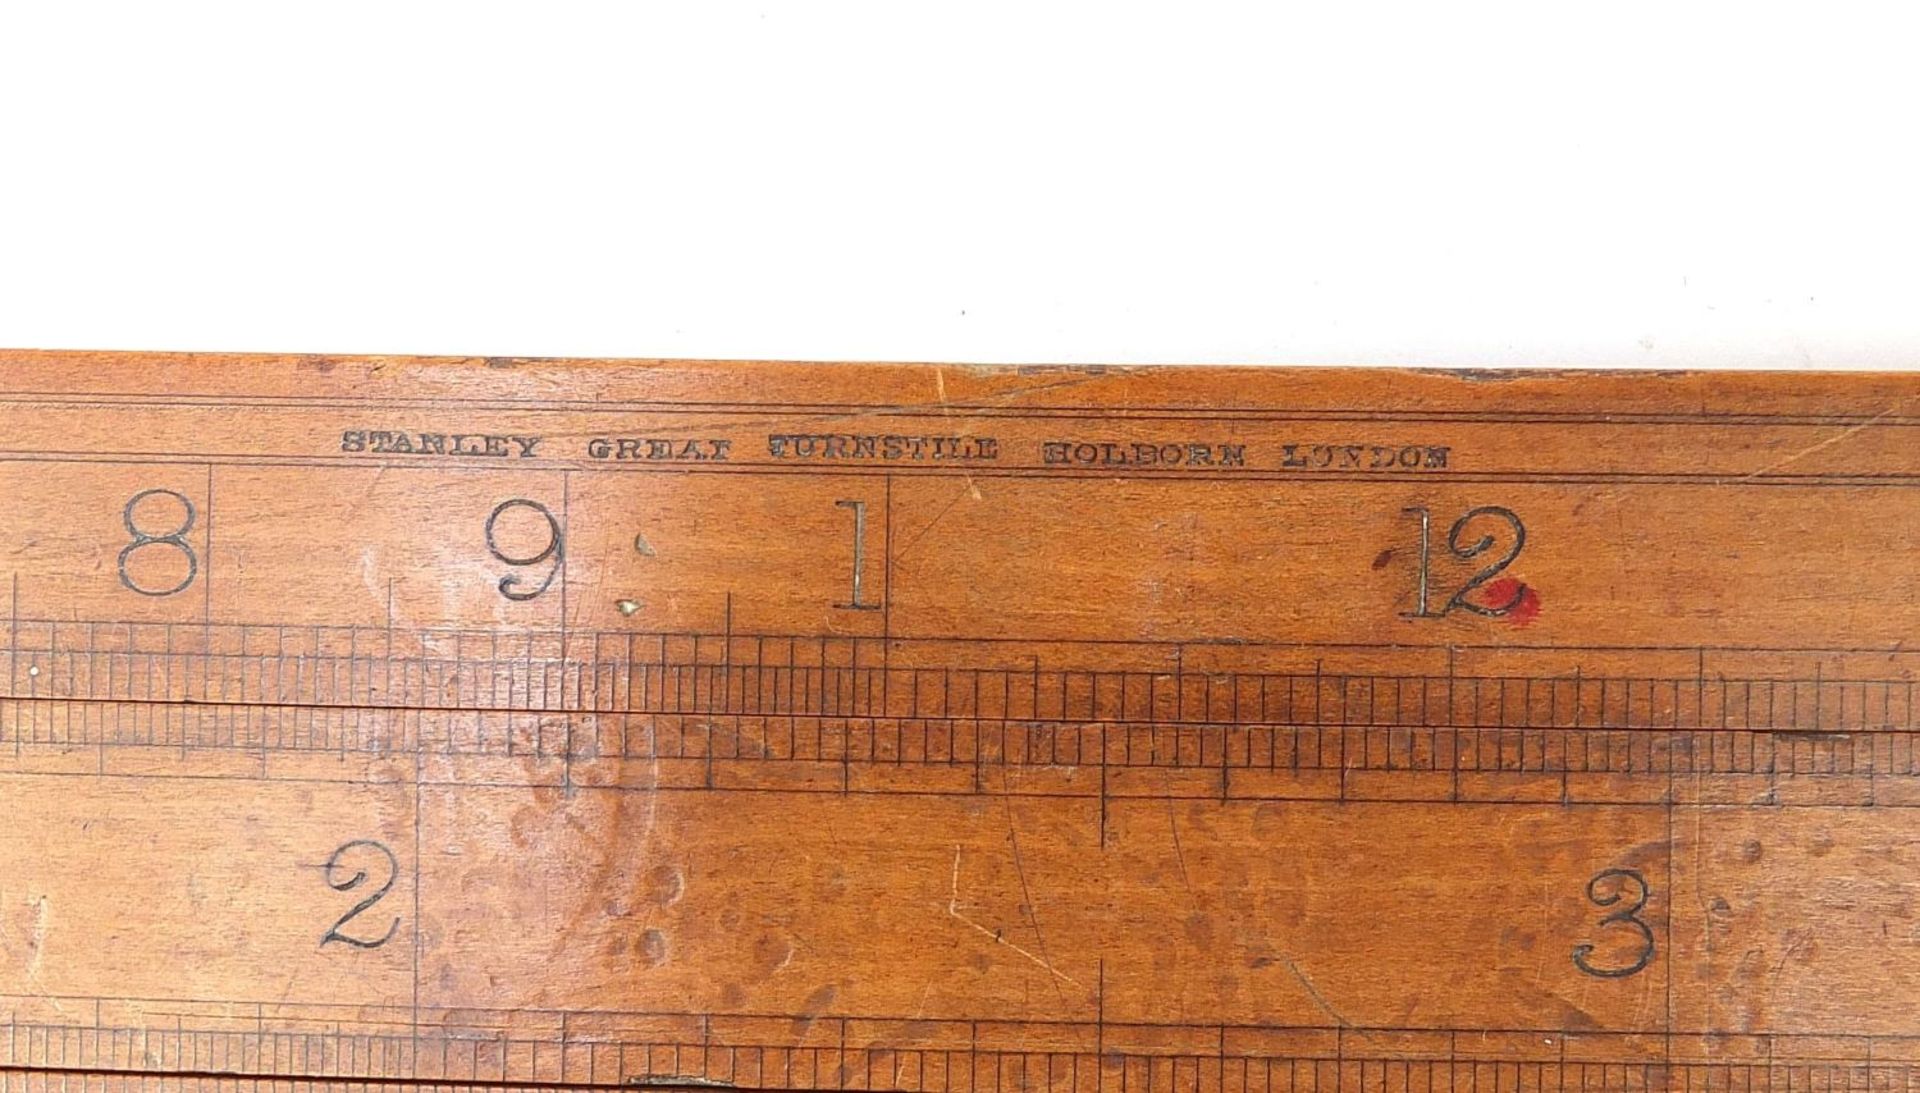 Antique Stanley boxwood three foot sliding rule impressed Stanley Great Turnstile Holborn London, - Image 11 of 14